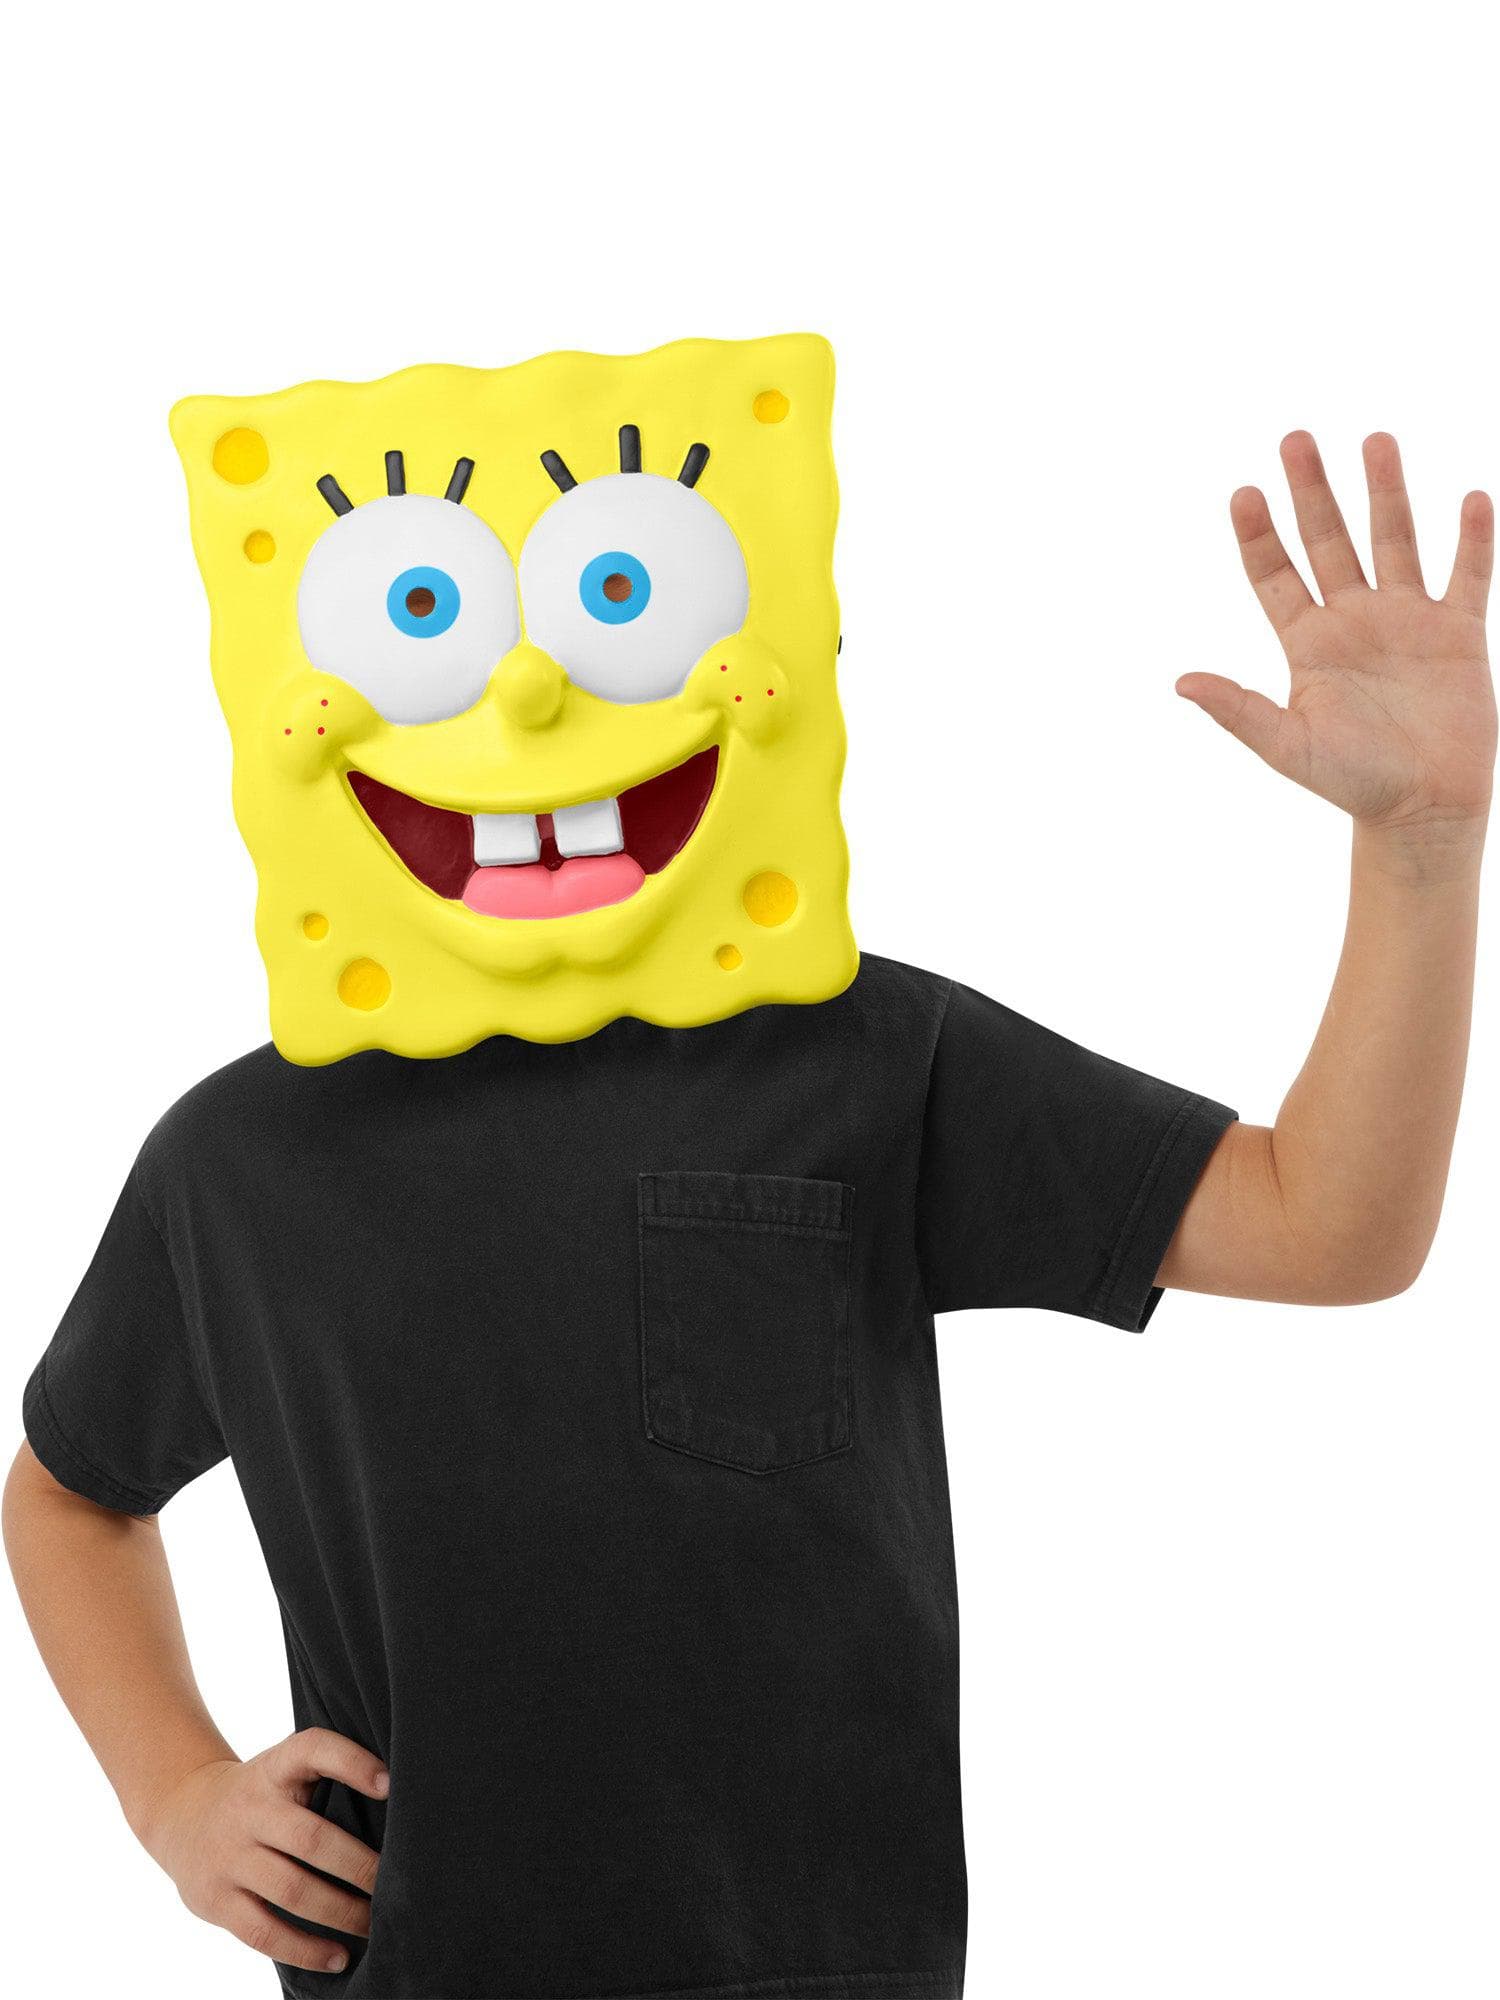 Kids' SpongeBob SquarePants Mask - costumes.com